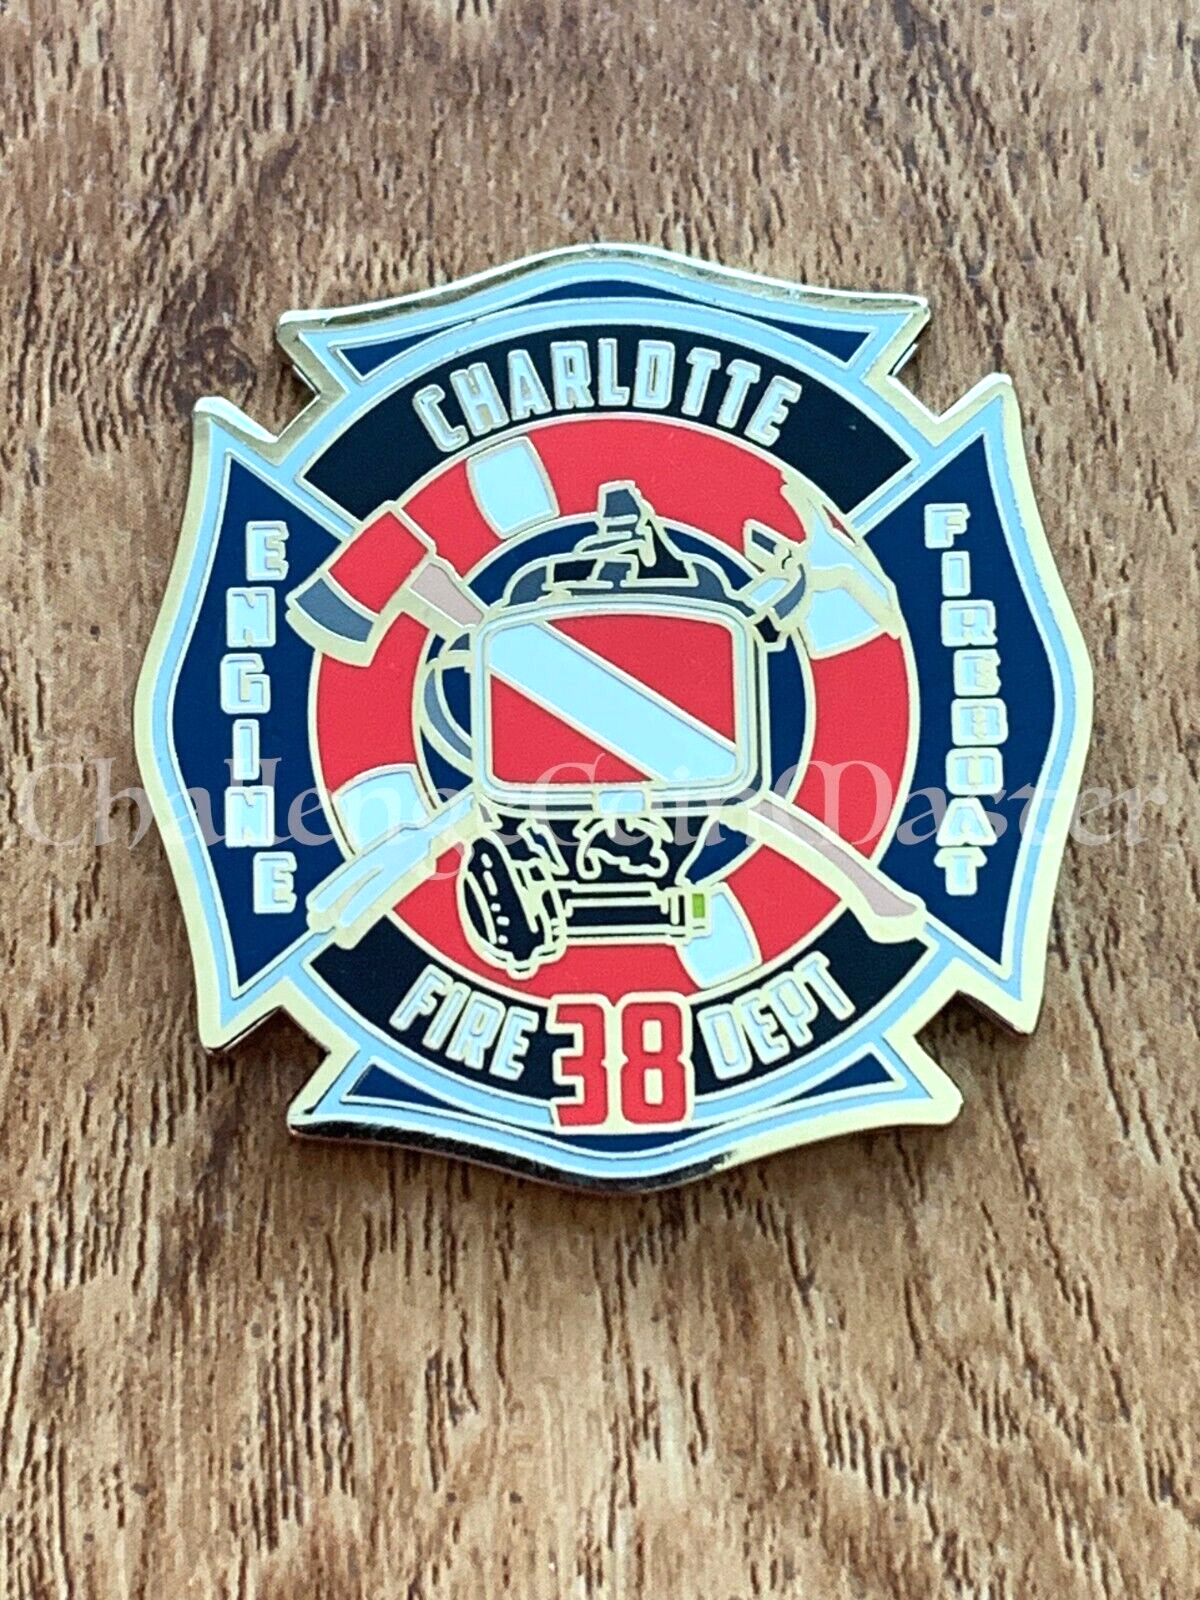 E86 Charlotte Fire Department Station 38 Fireboat North Carolina Challenge Coin